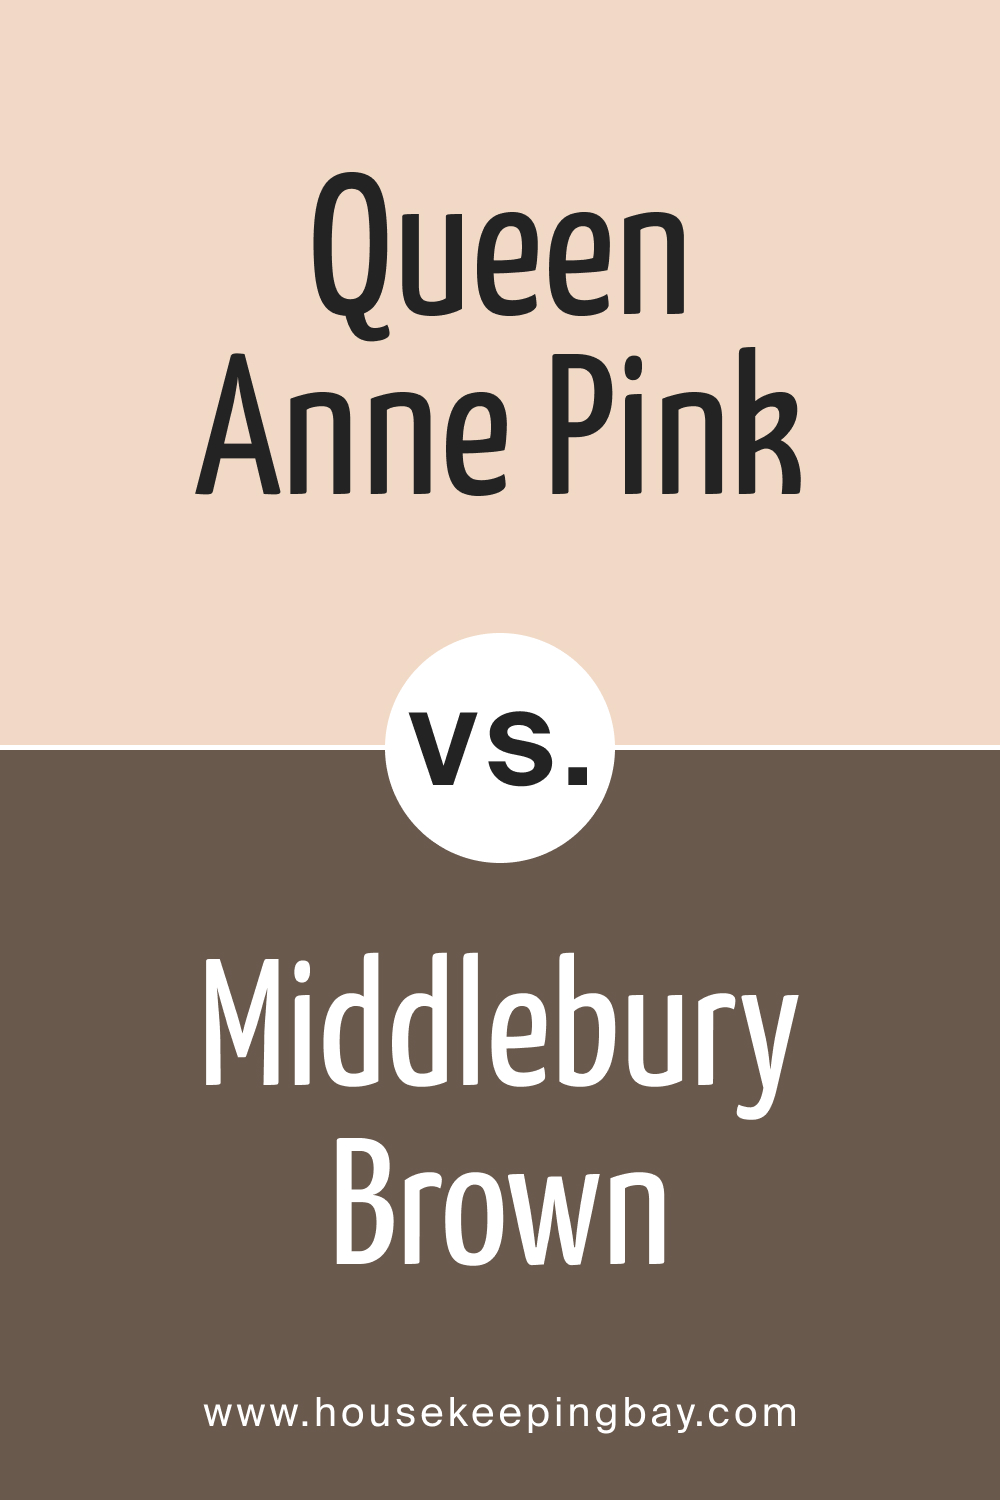 Queen Anne Pink HC-60 vs. HC-68 Middlebury Brown